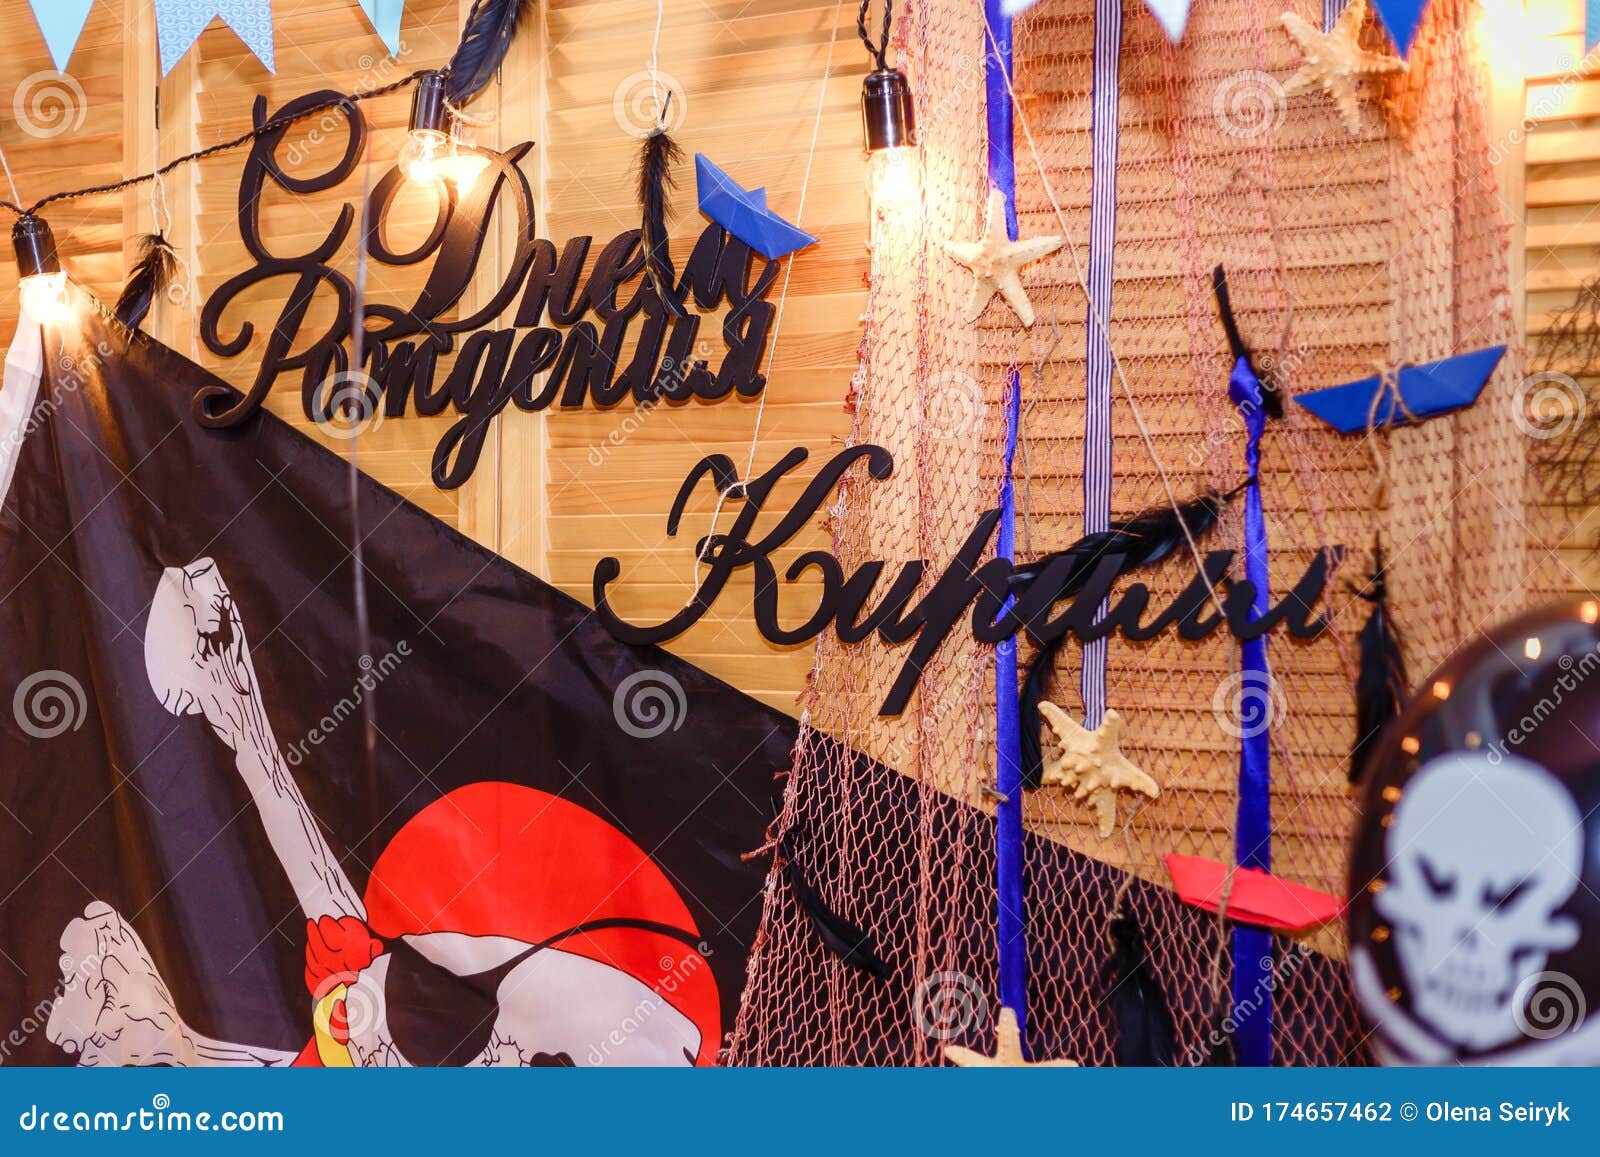 Birthday Balloons Black Flag With Rover Emblem Skull And Bones Stock Illustration Illustration Of Decorated Corsair